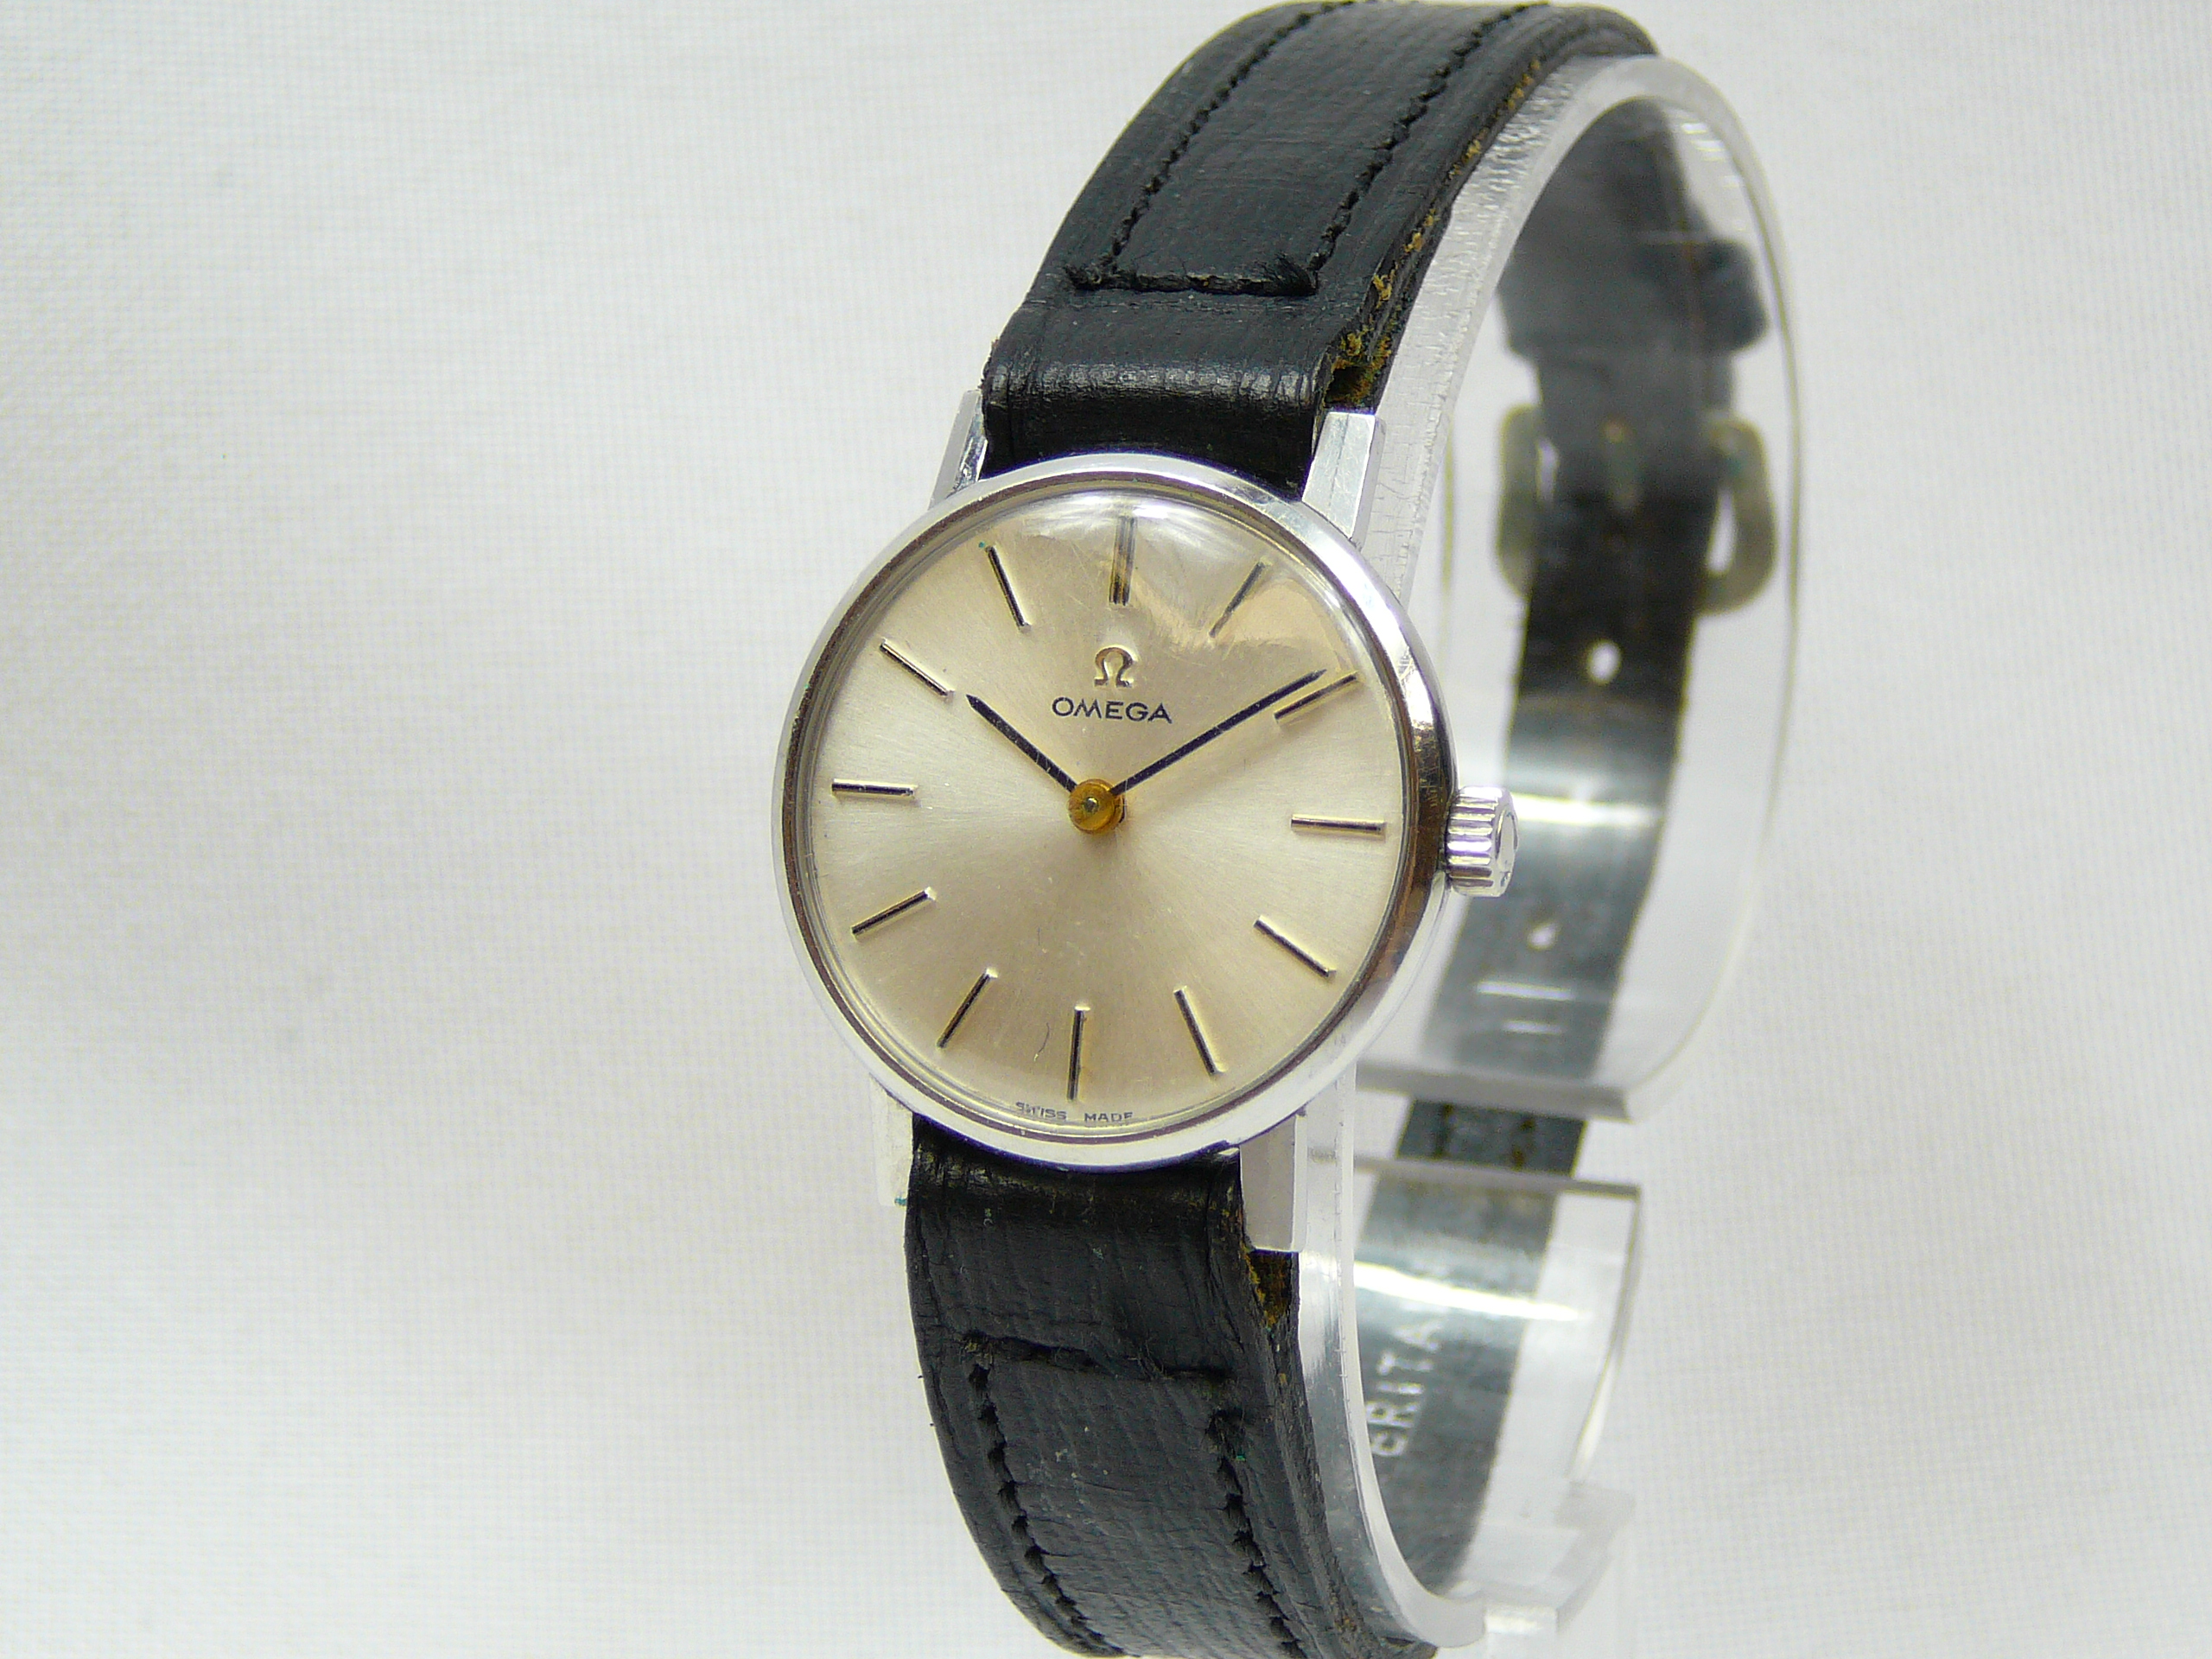 Ladies Vintage Omega Wristwatch - Image 2 of 3